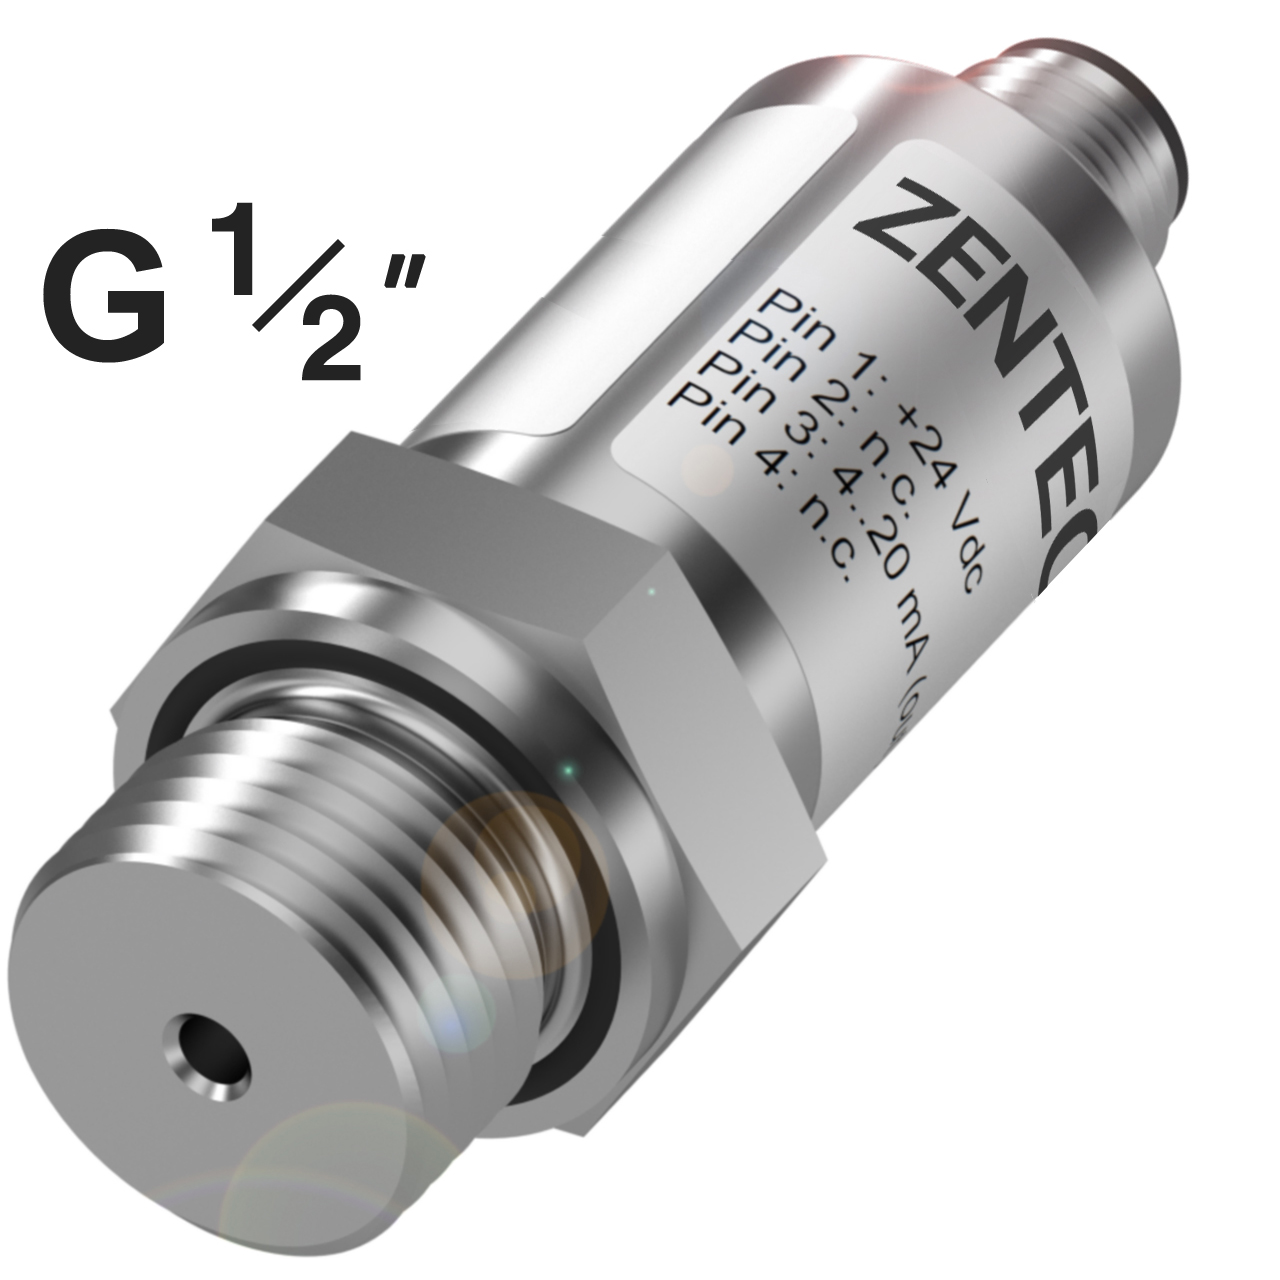 pressure transmitter g12 size